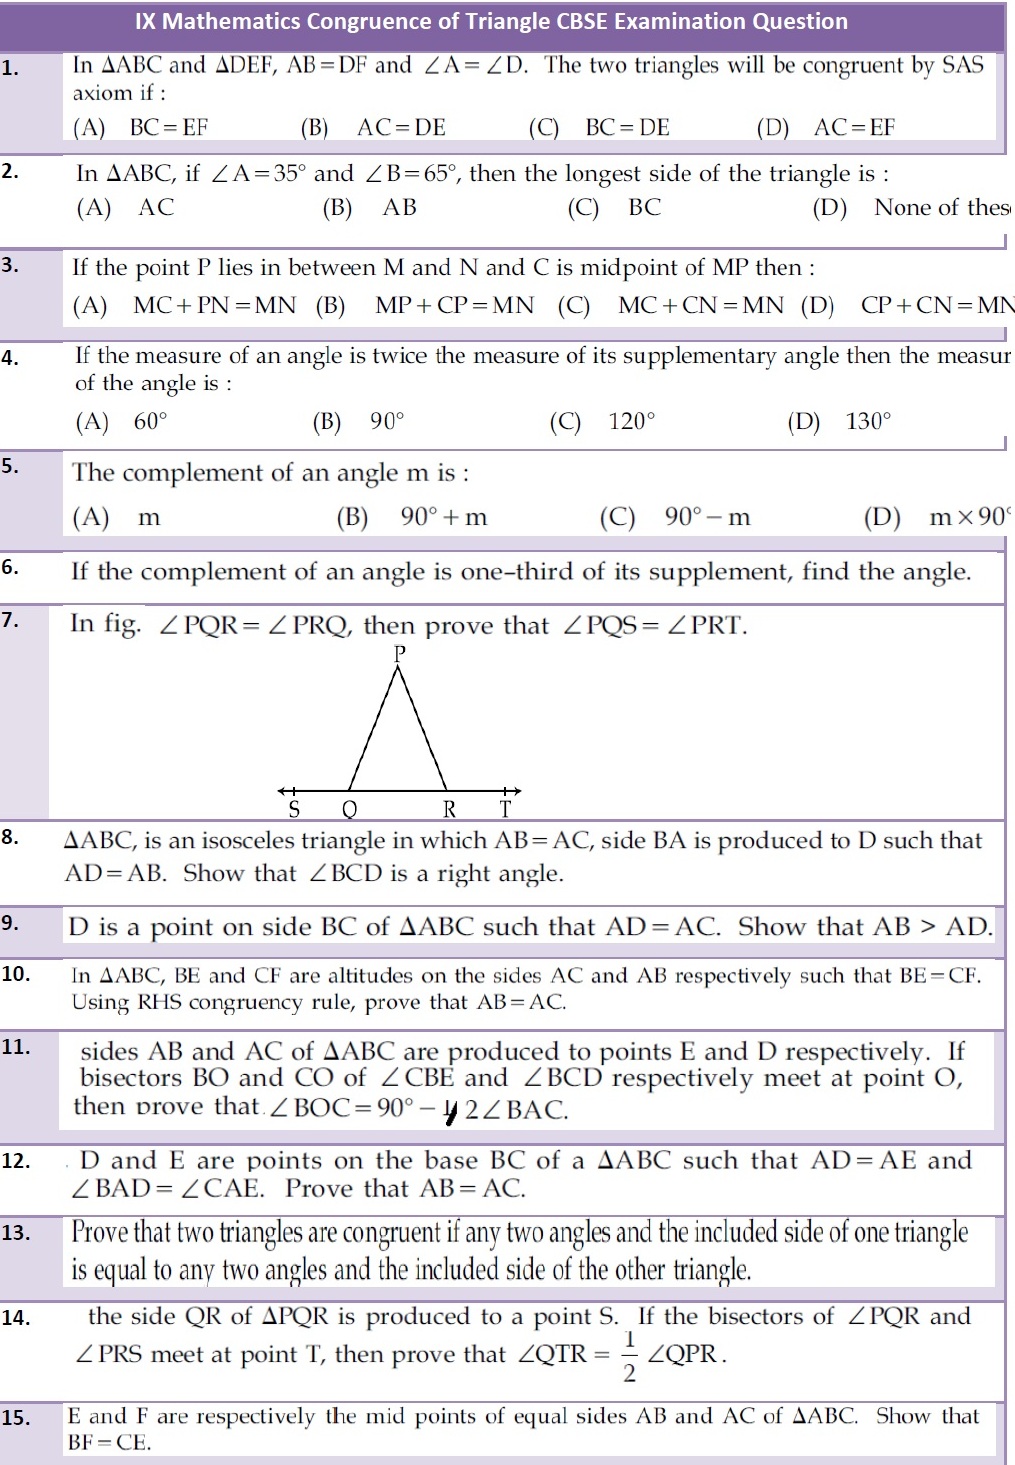 CBSE MATH STUDY IX Mathematics Congruence Of Triangle CBSE Examination Question 2012 13